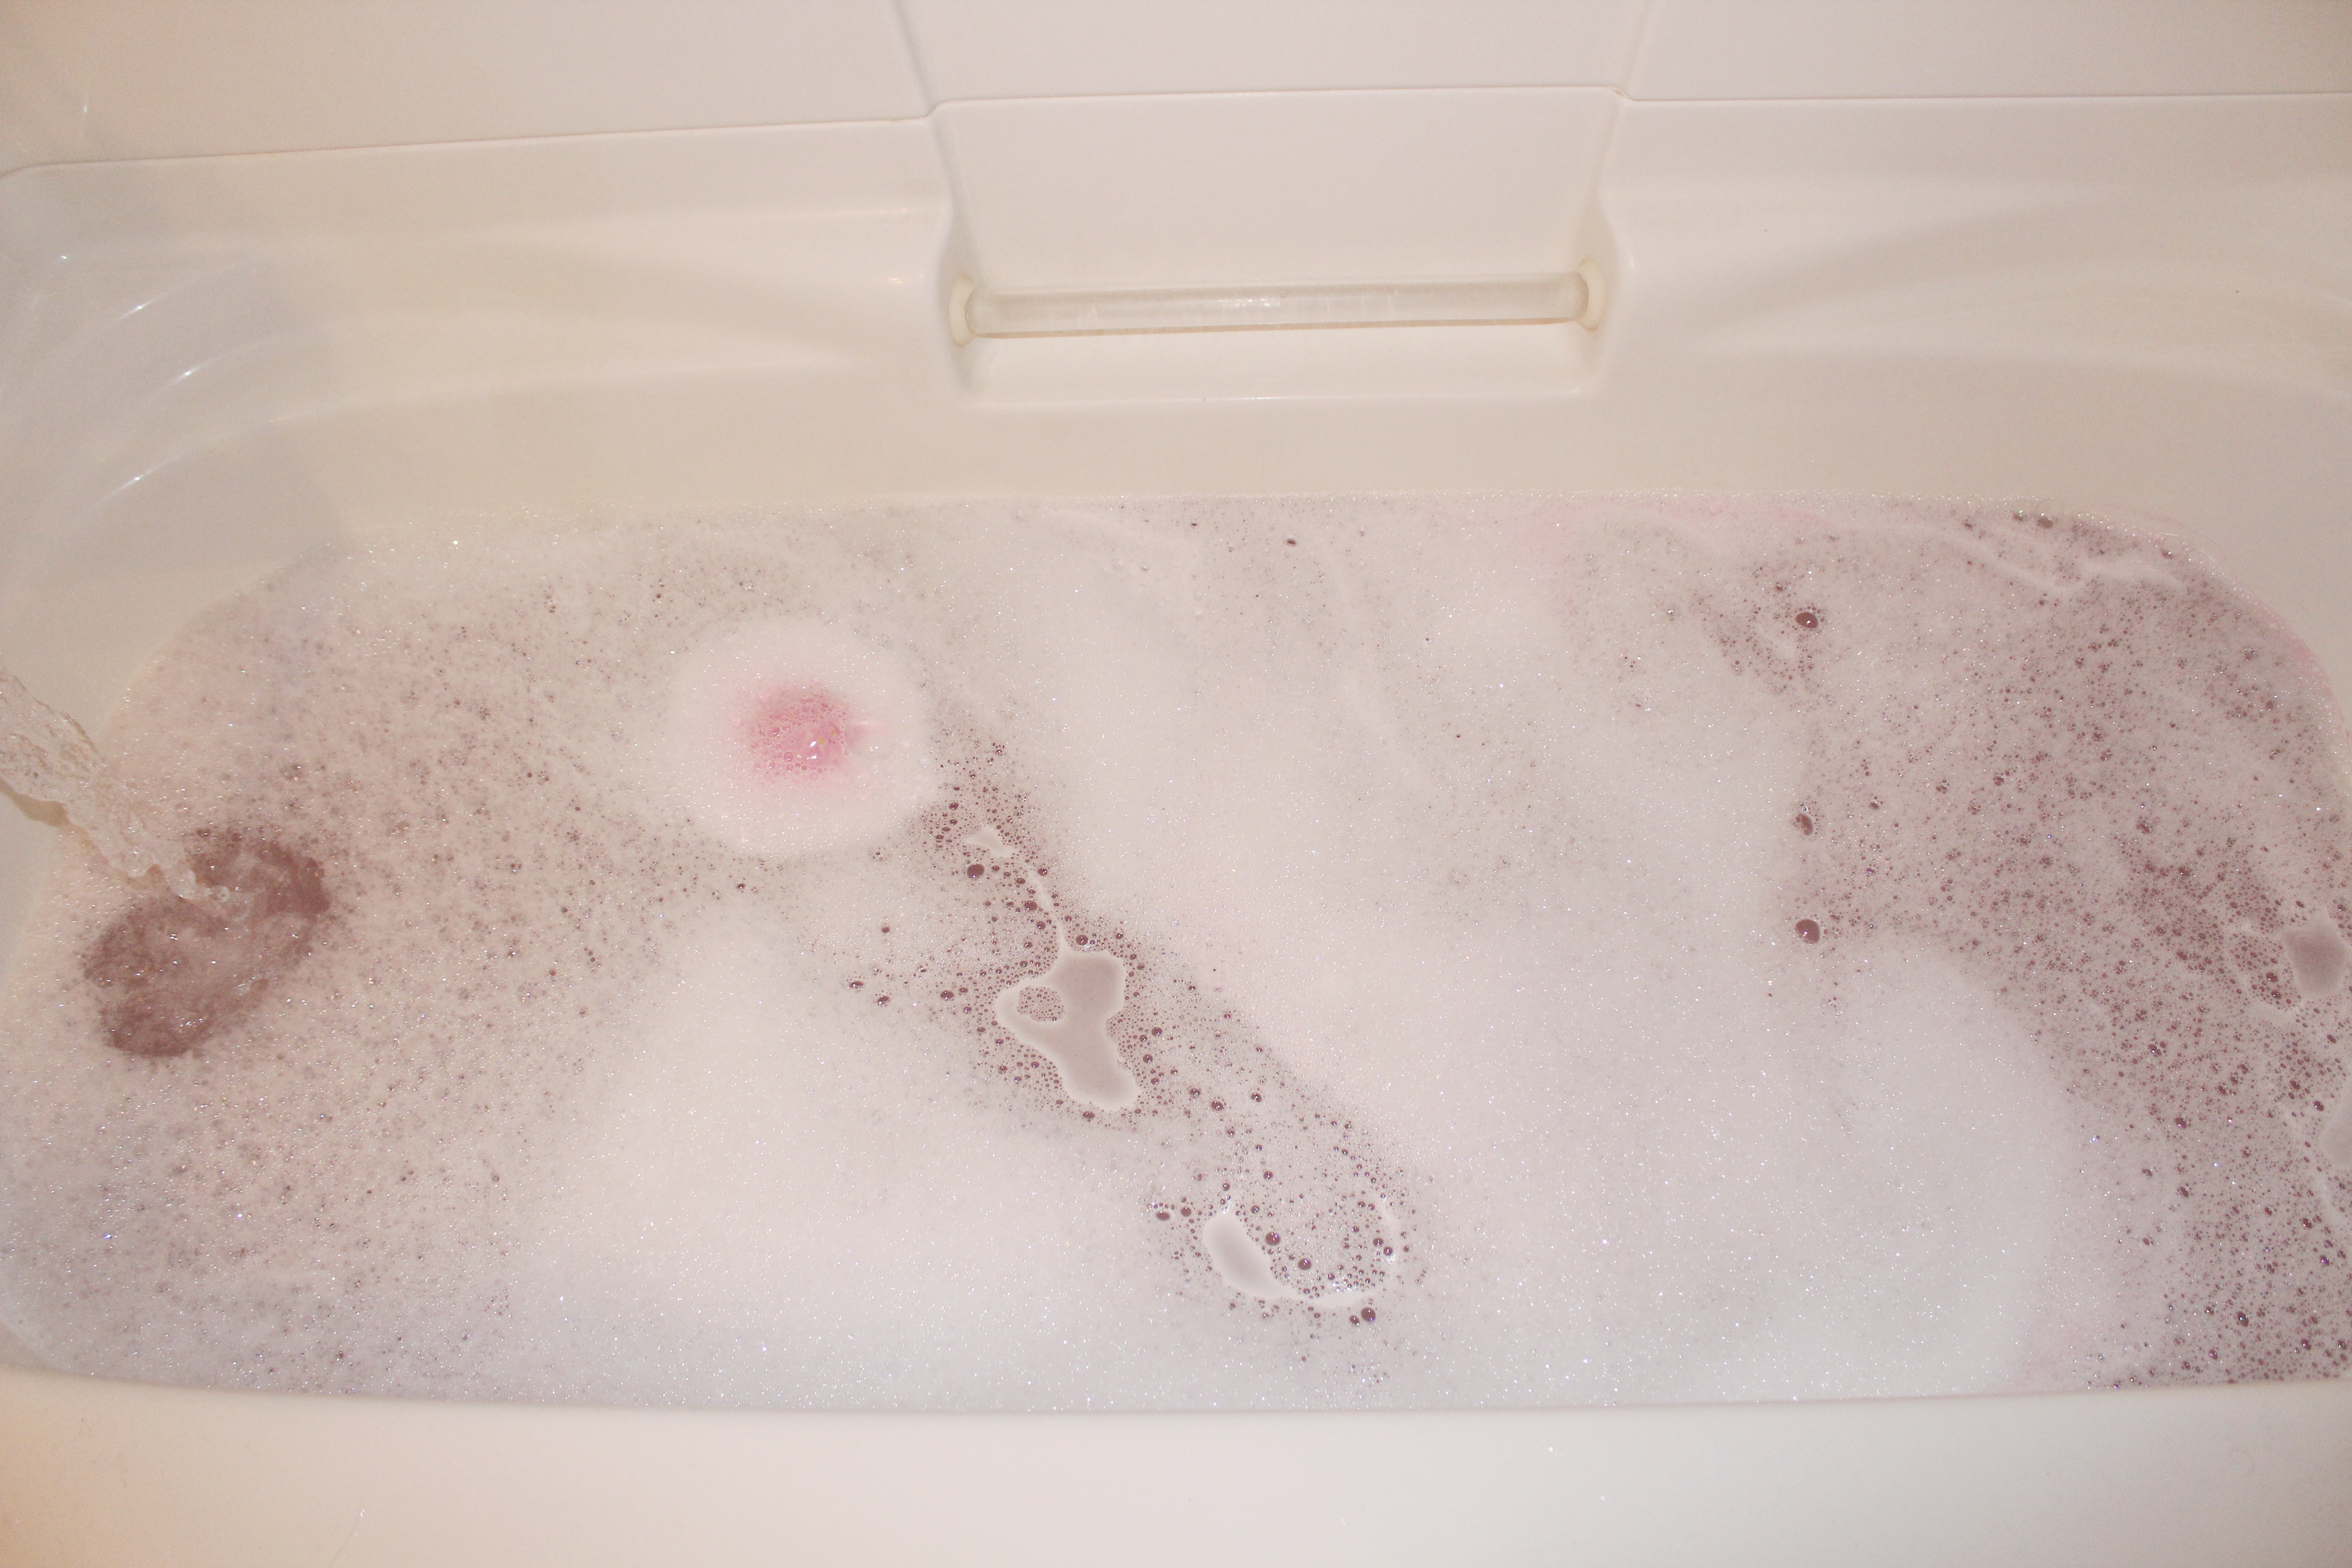 Twilight Lush Bath Bomb Review